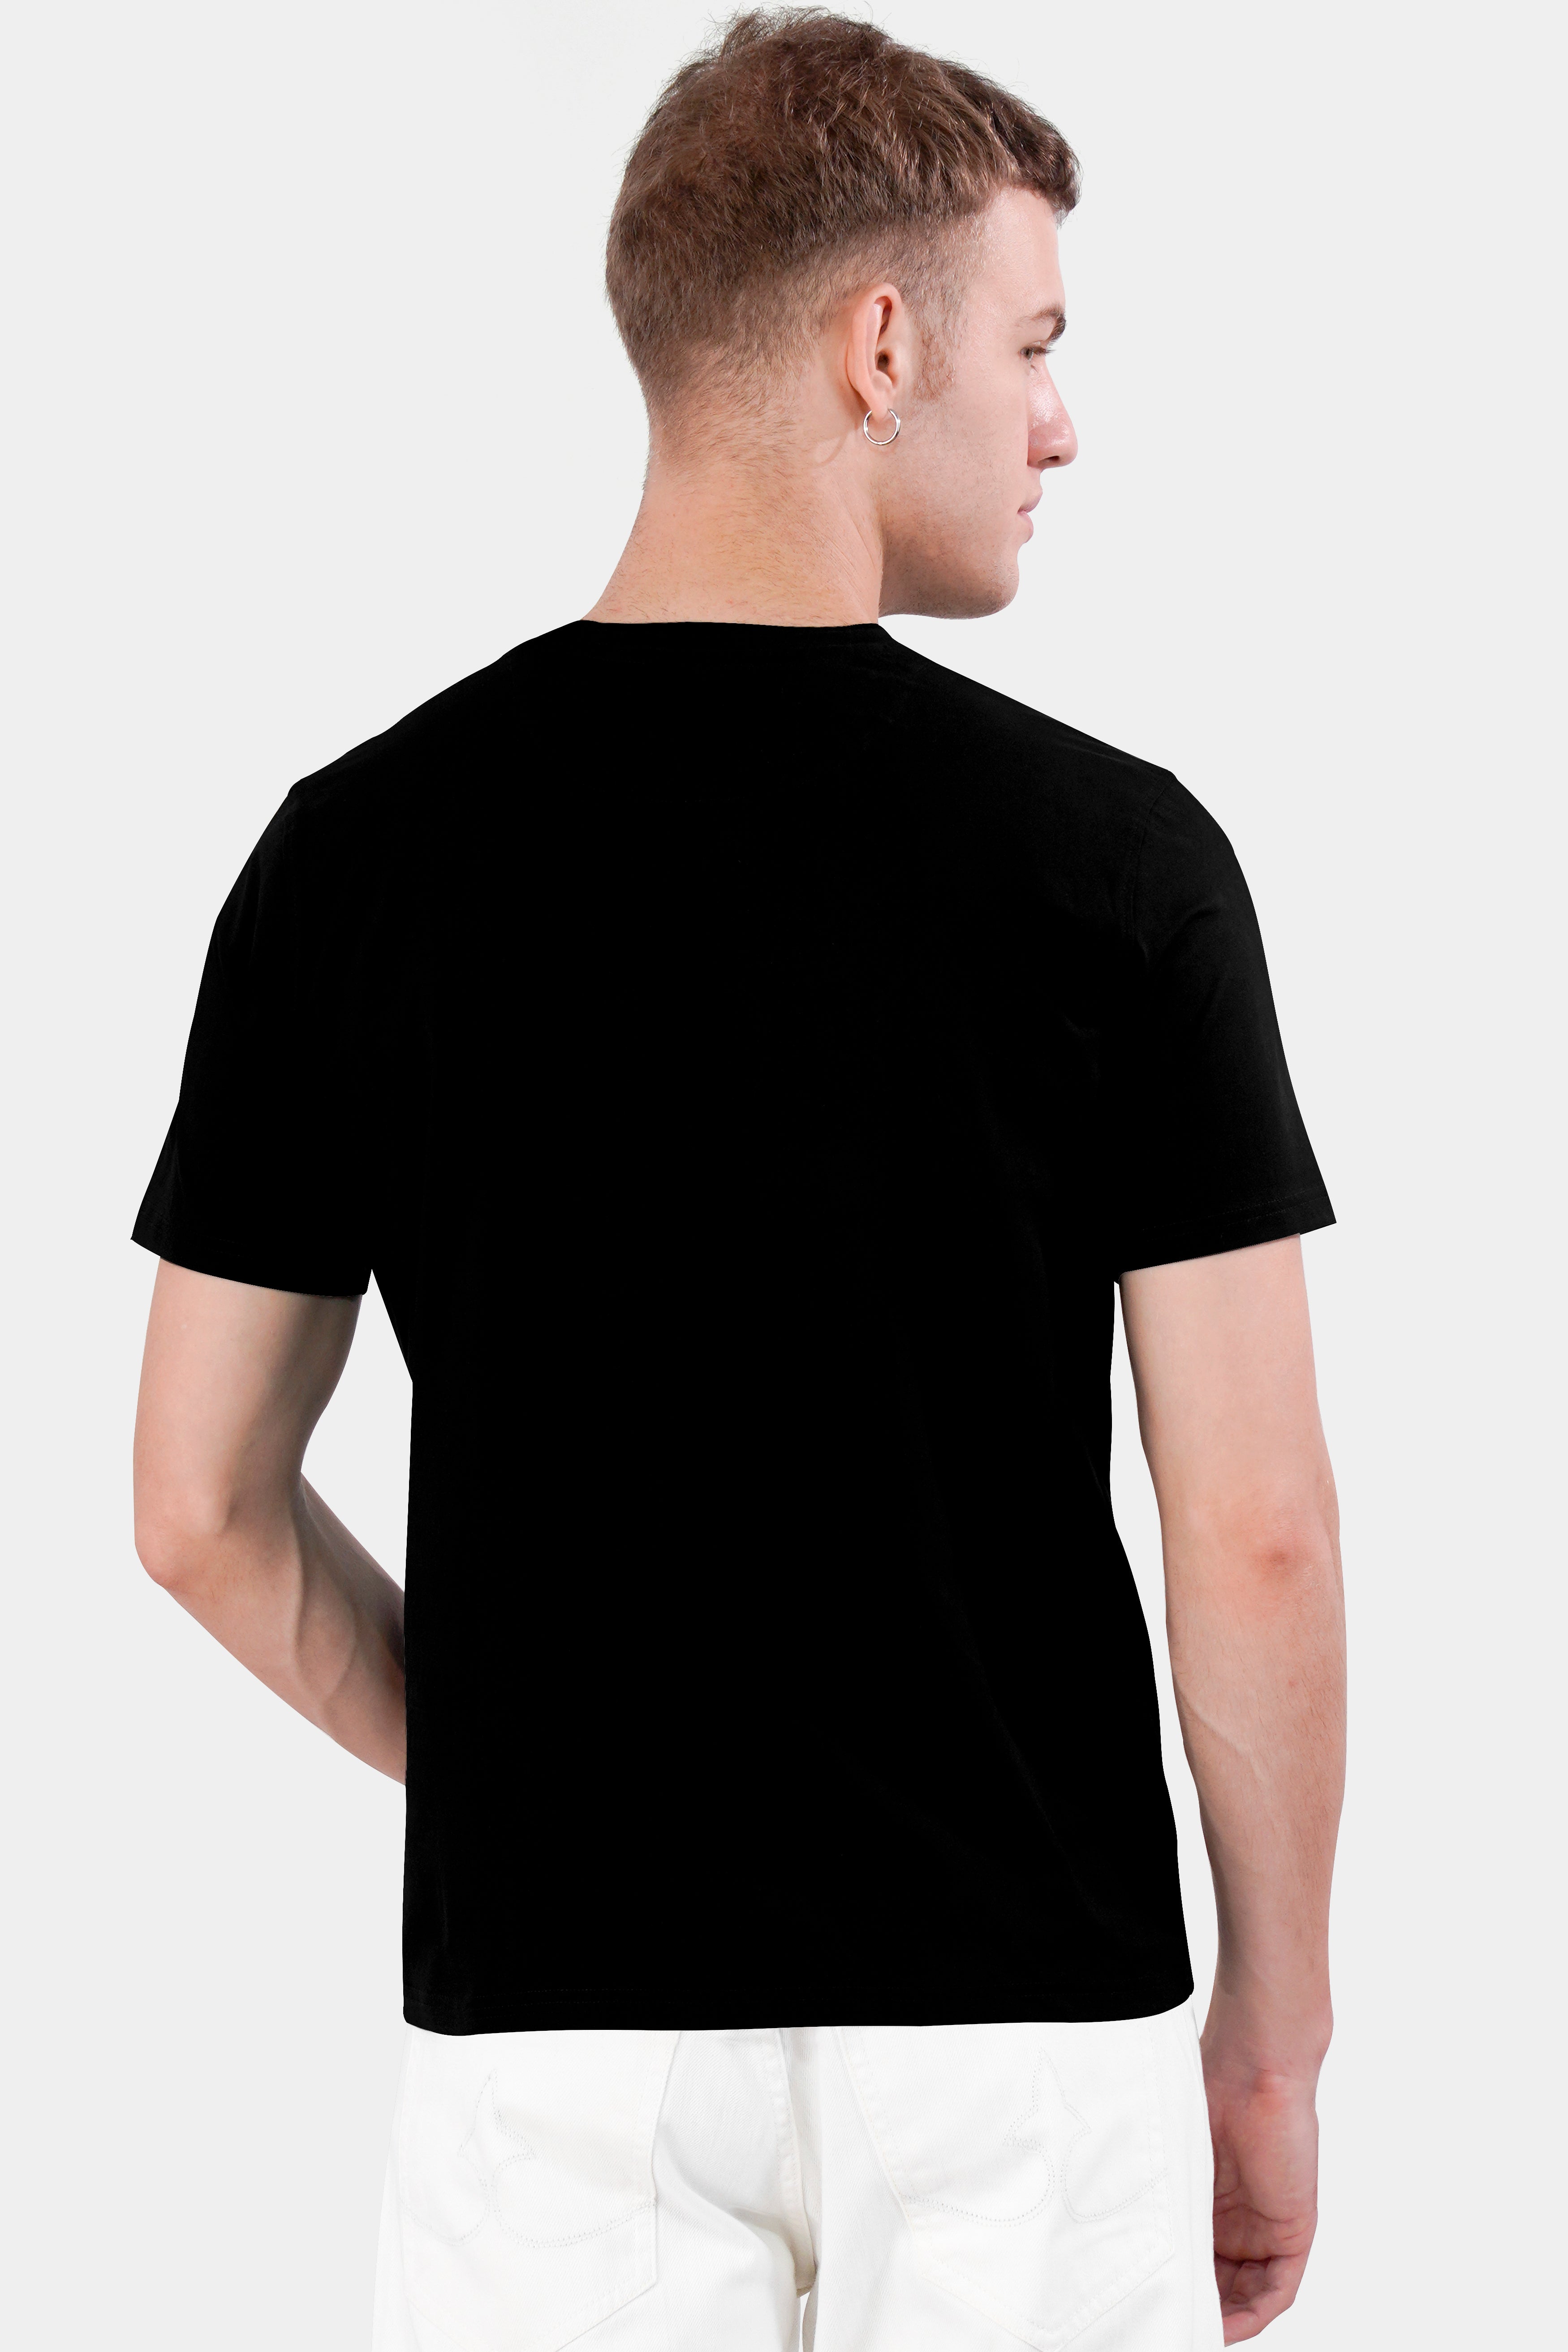 Jade Black Printed Premium Cotton T-shirt TS852-W03-RPRT81-S, TS852-W03-RPRT81-M, TS852-W03-RPRT81-L, TS852-W03-RPRT81-XL, TS852-W03-RPRT81-XXL